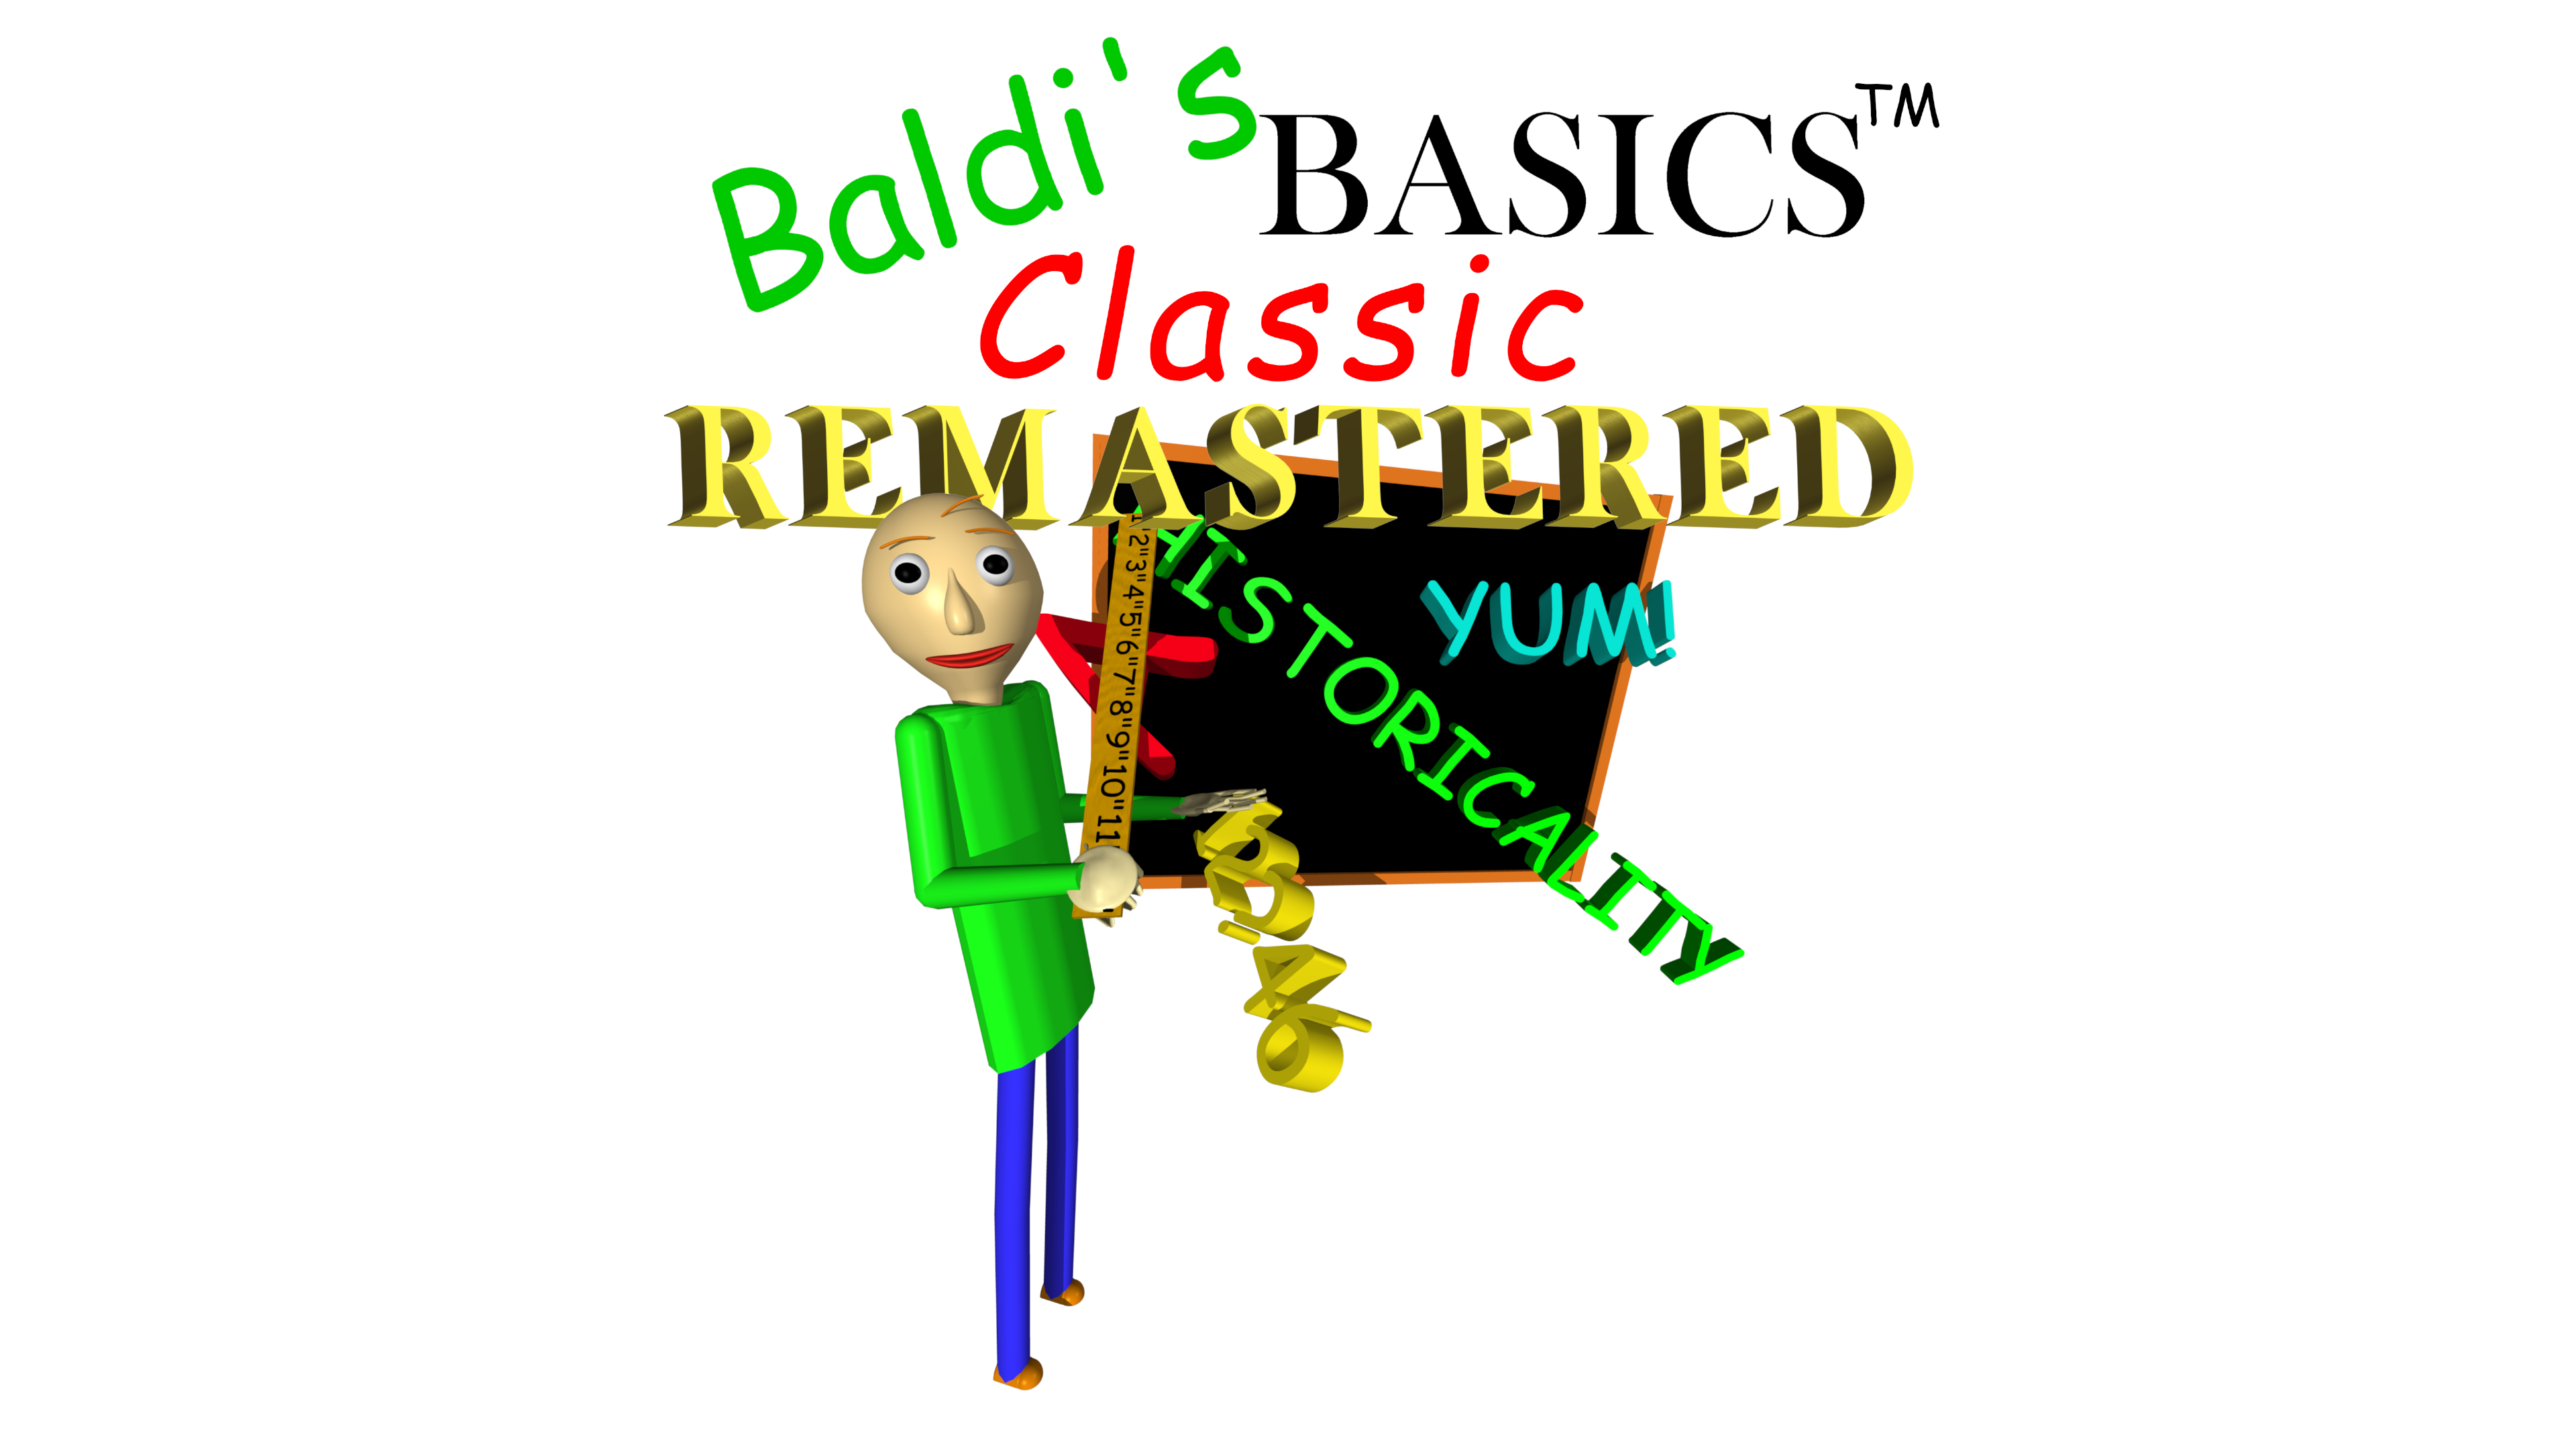 Baldi's Basics Classic Remastered. Baldis Basics Classic Remastered. Baldi Basics Classic. Baldis Basics Baldi.